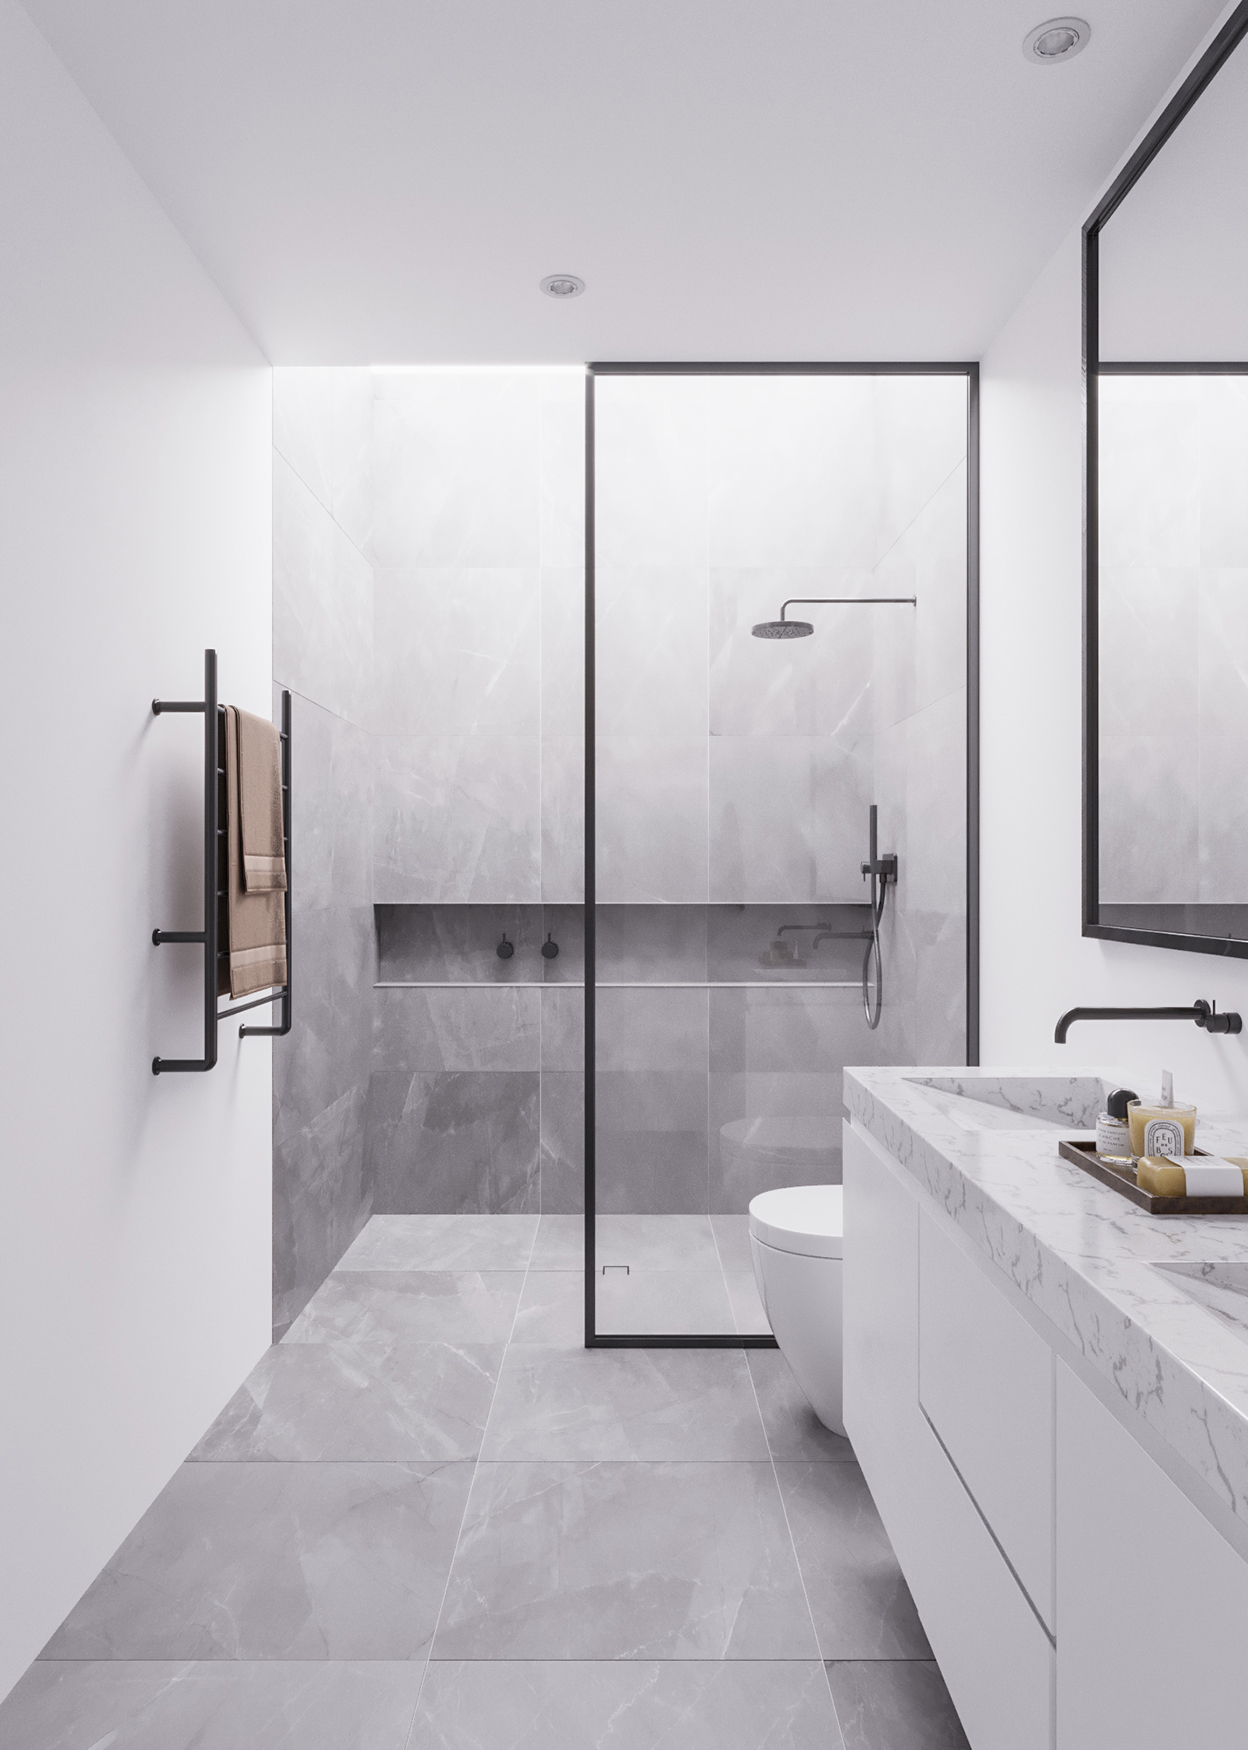 MK2 Bathroom - Ronen Bekerman - 3D Architectural Visualization ...